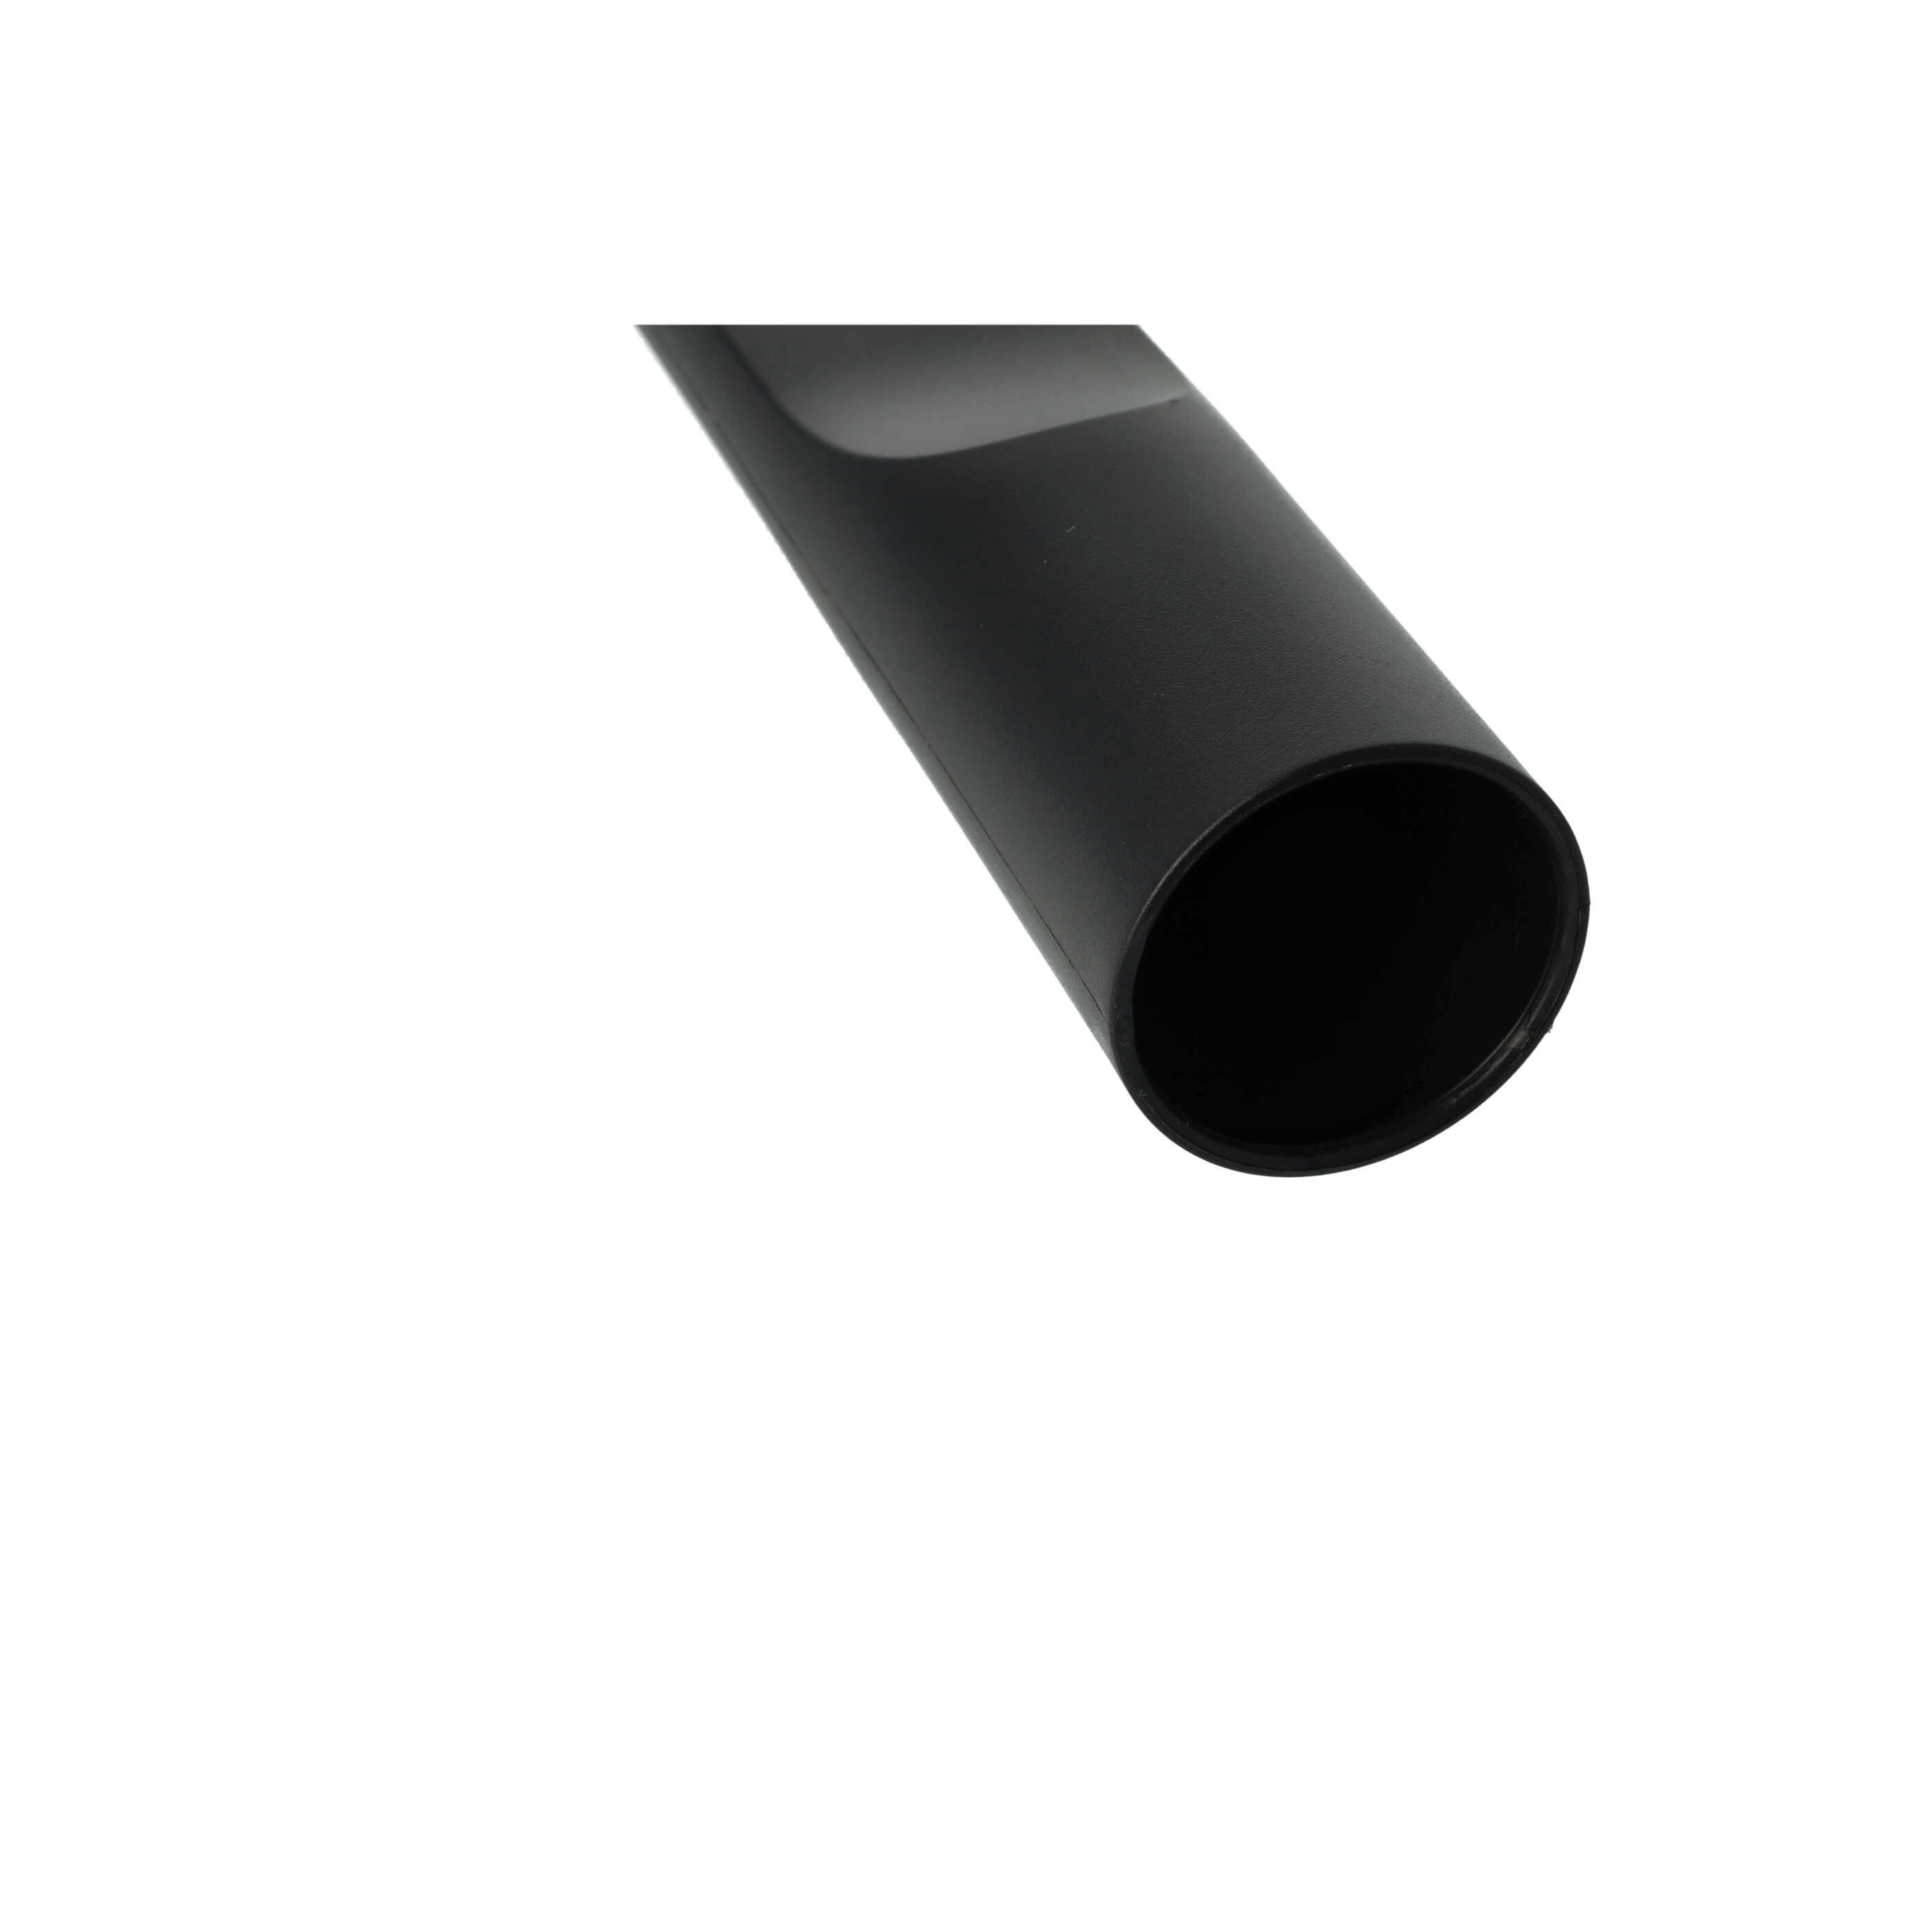 Vacuum Cleaner Crevice Nozzle 35 mm replaces Bosch/Siemens 00461406 - 21.5 cm